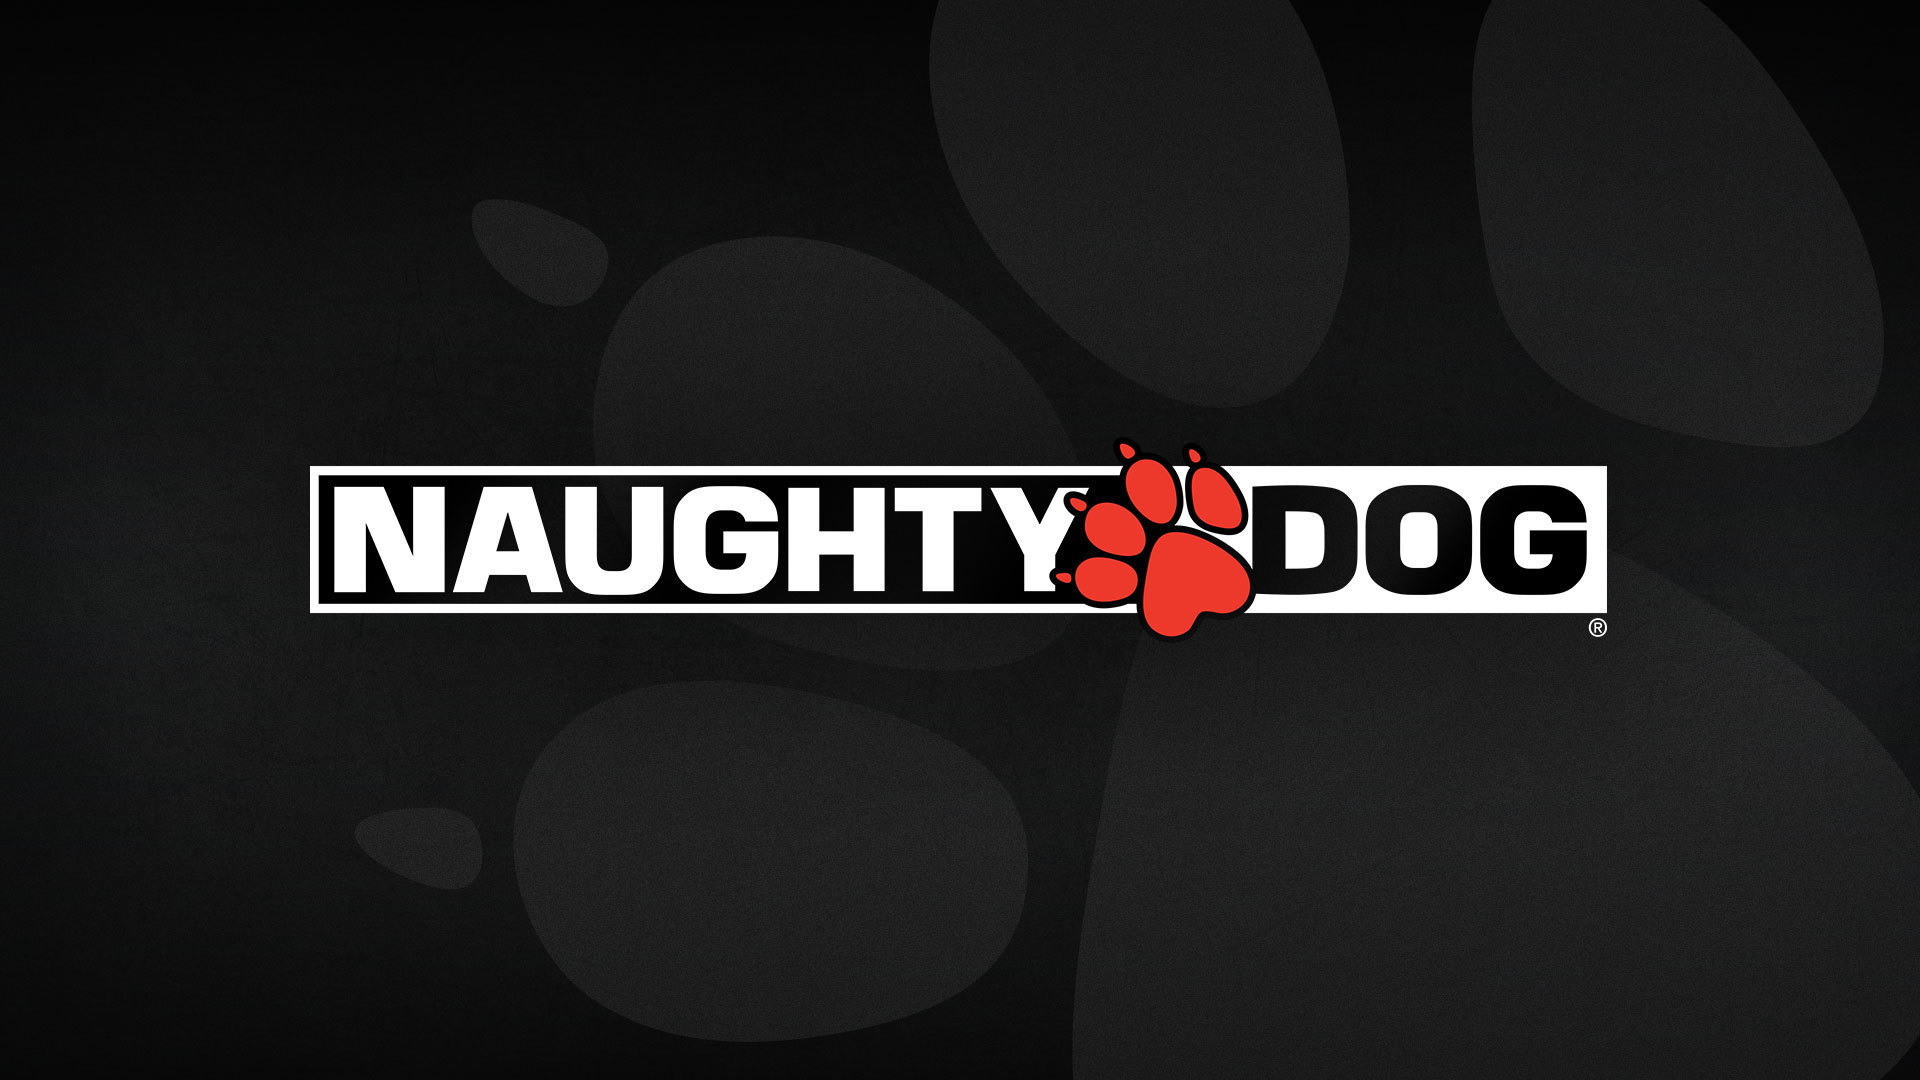 Naughty Dog, LLC added a new photo. - Naughty Dog, LLC